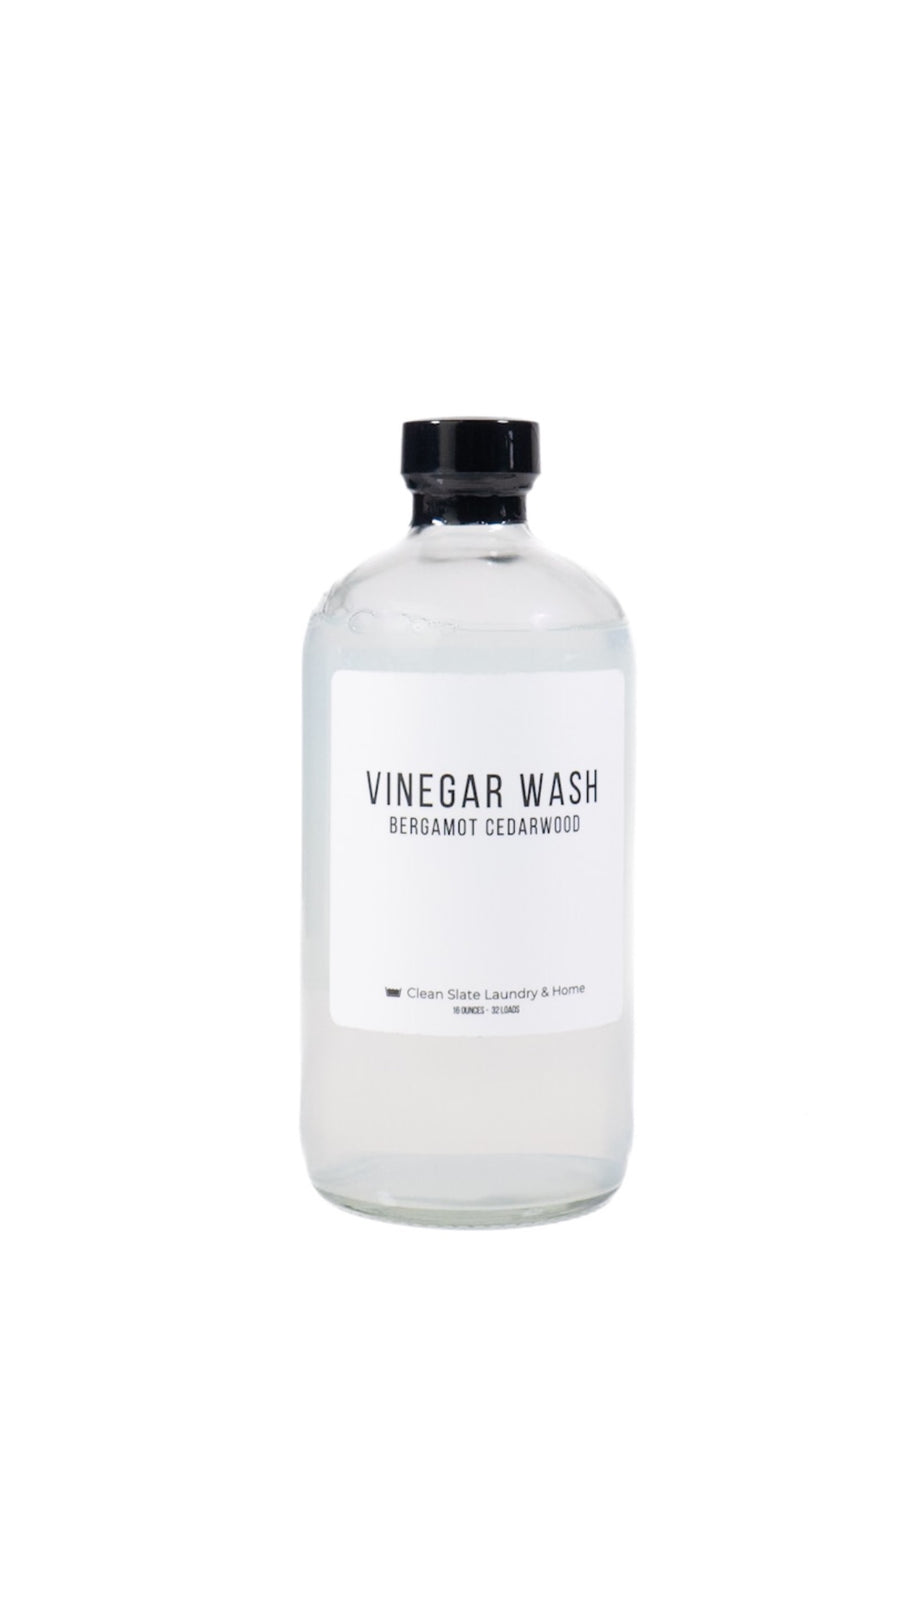 16oz Bergamot Cedarwood Vinegar Wash by Clean Slate Laundry & Home